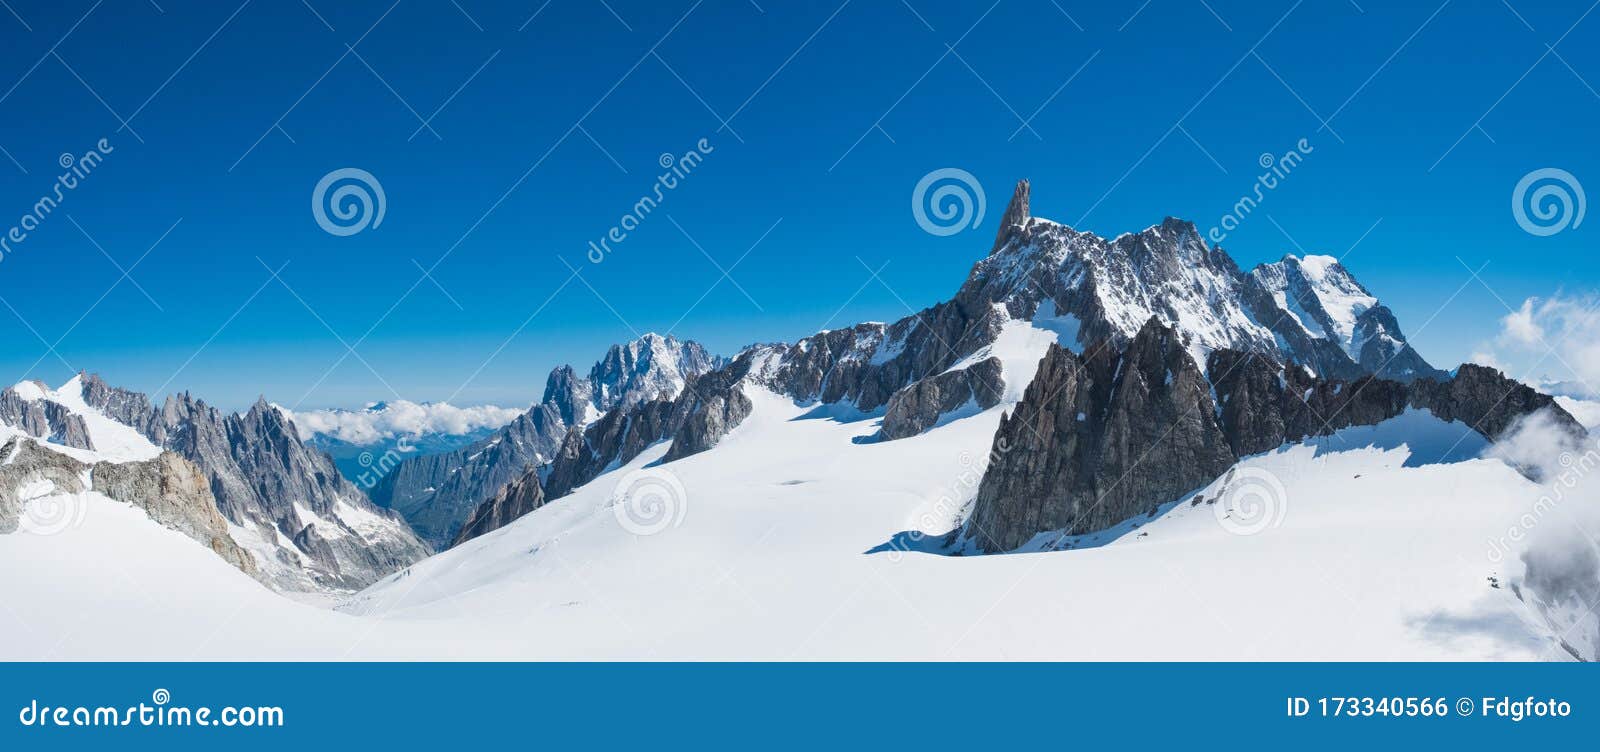 monte bianco panoramic landscape with dente del gigante